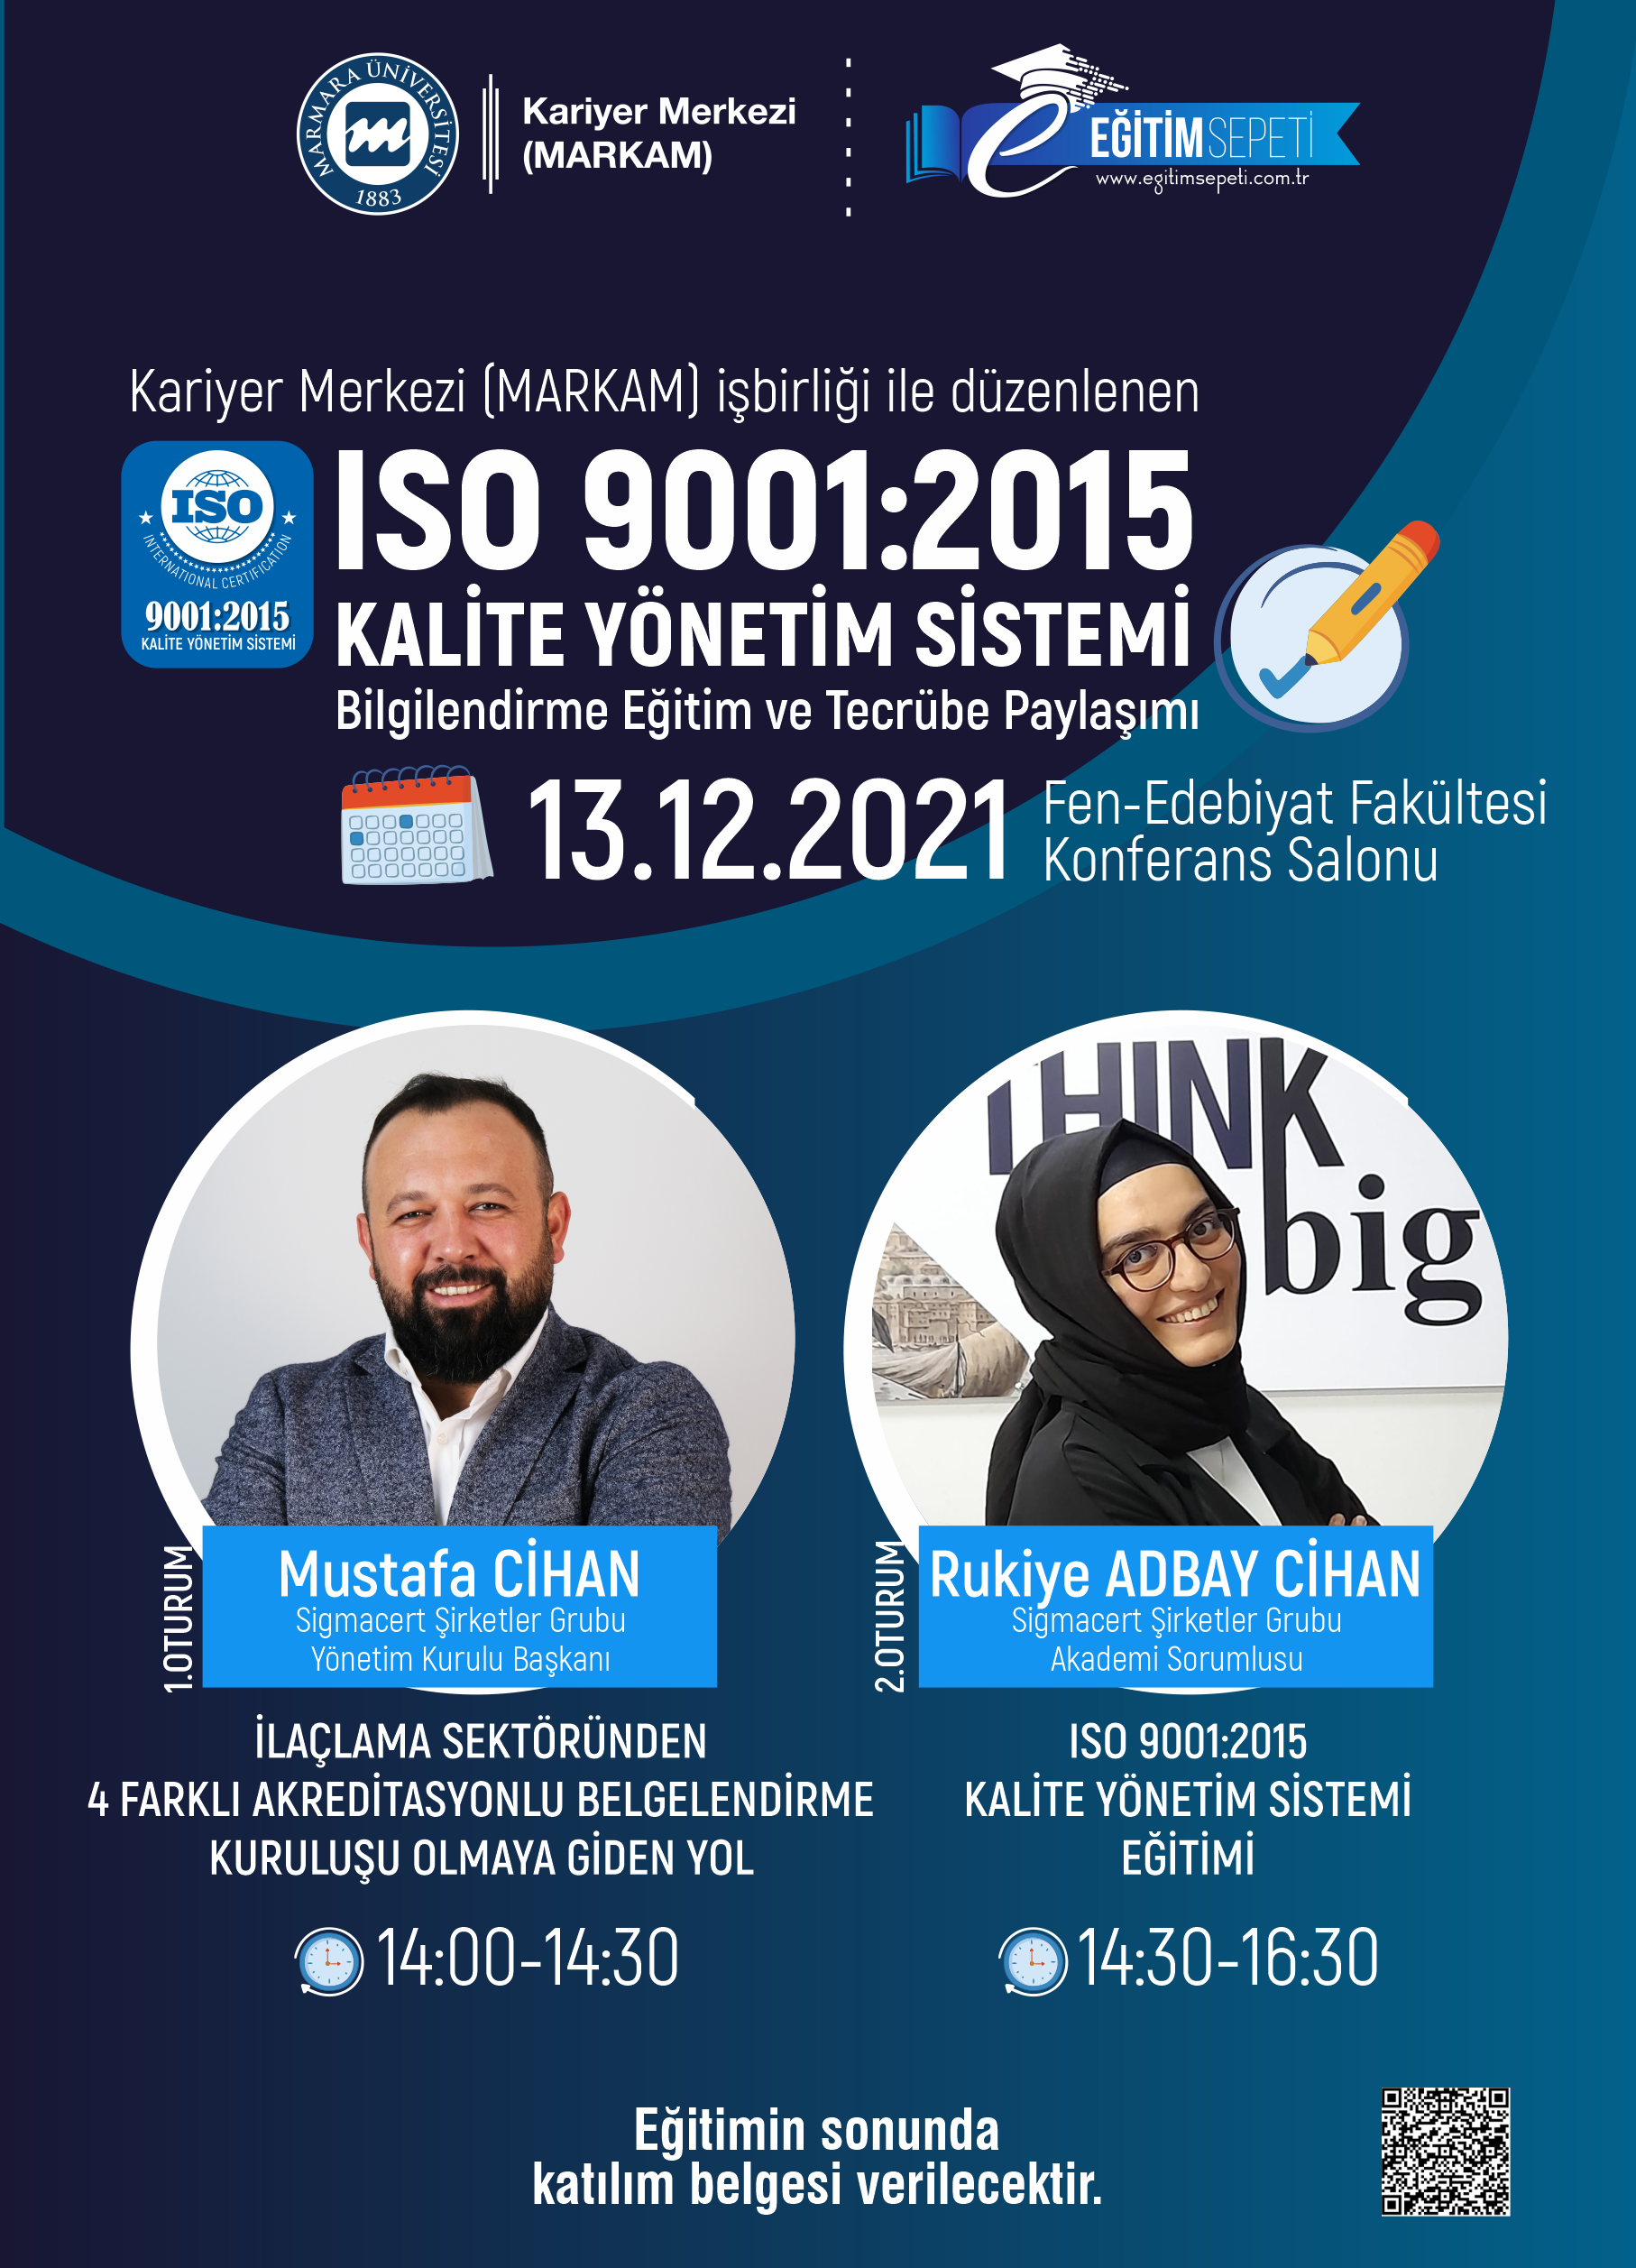 ISO 9001-2015 KALİTE YÖNETİM SİSTEMİ-Eğitim Sepeti Afiş-7.12.2021.png (1.34 MB)